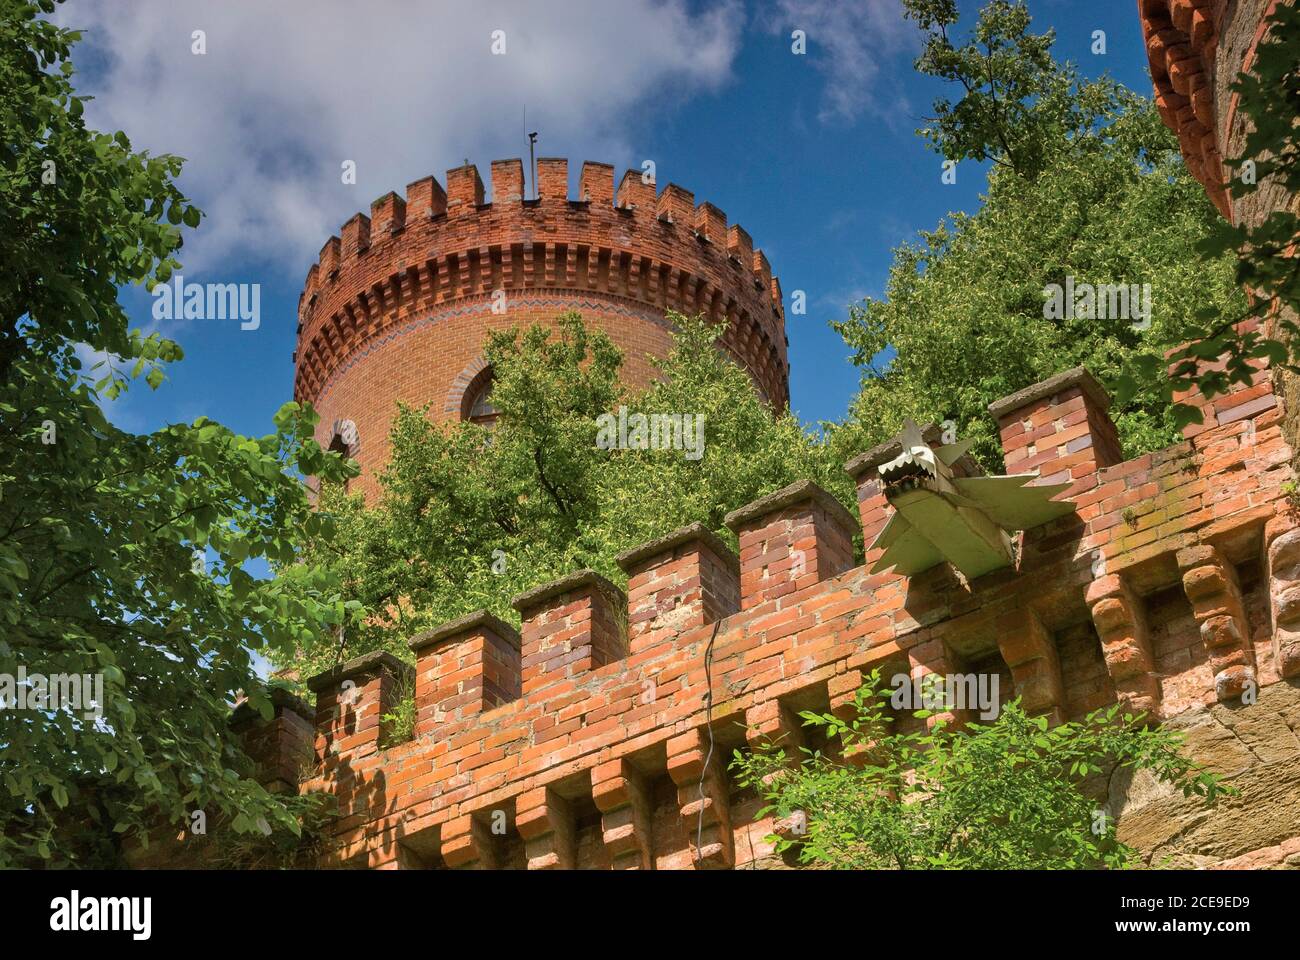 Torre merlata e muro, gargoyle, al Castello di Kamieniec Ząbkowicki nella bassa Slesia, Polonia Foto Stock